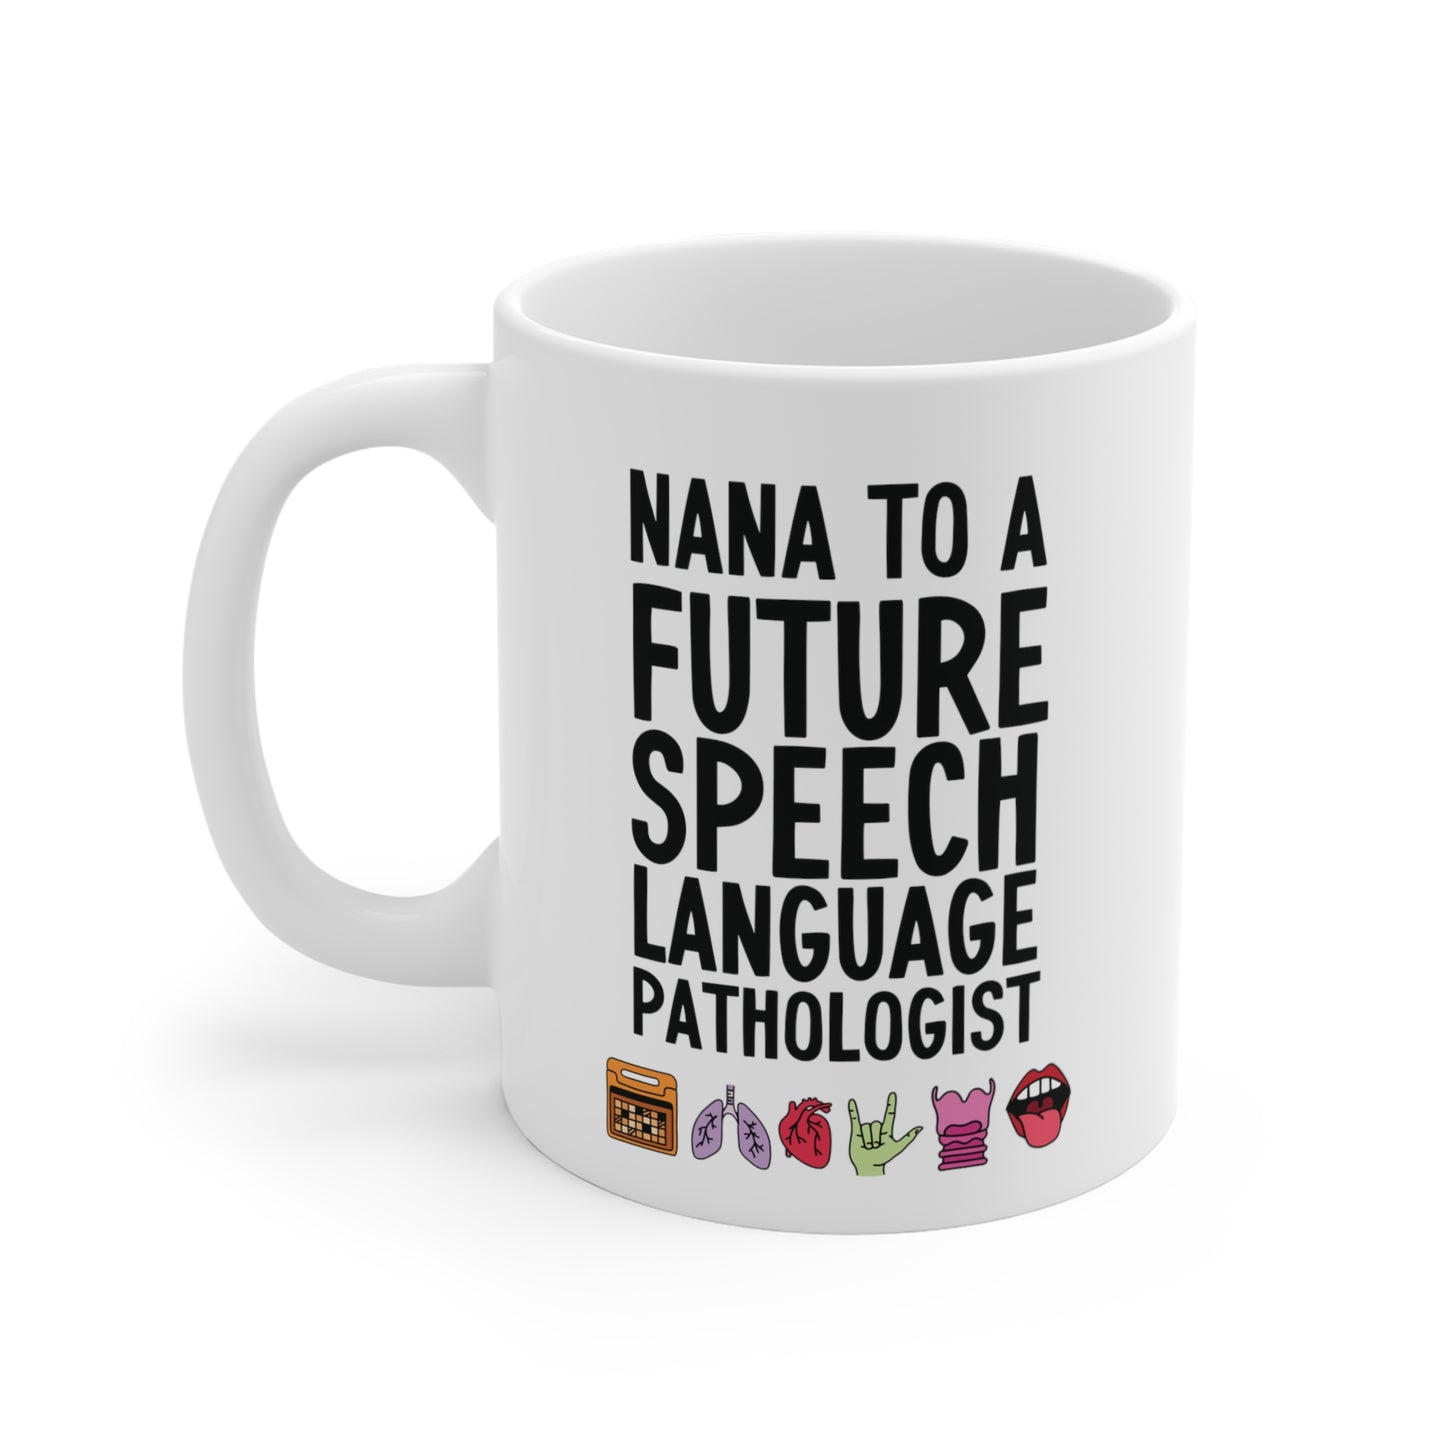 Nana to a Future Speech Language Pathologist Mug